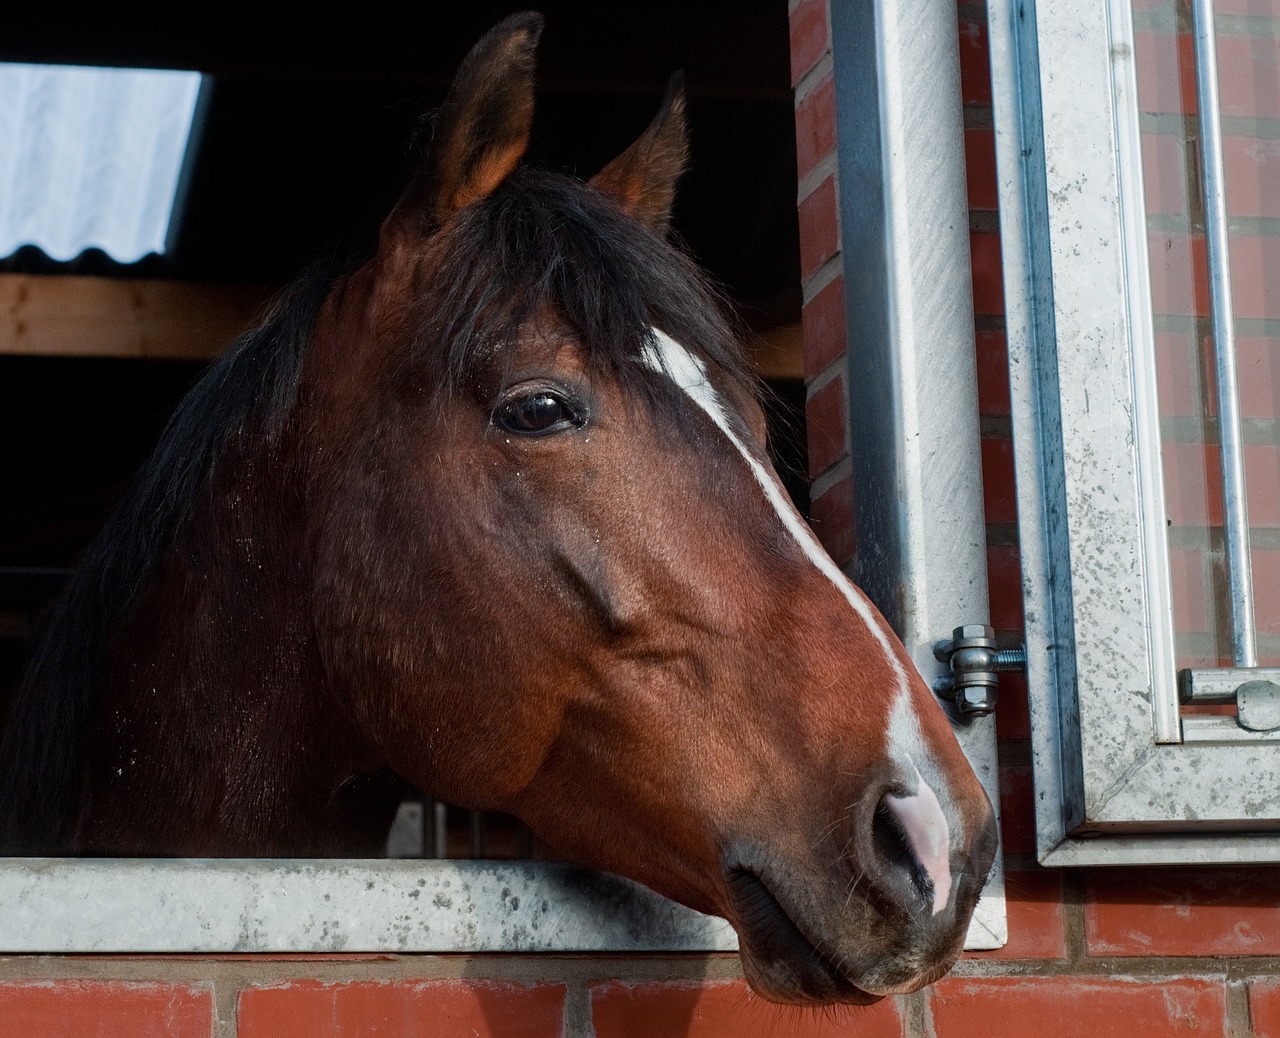 Image - horse head window to watch animal